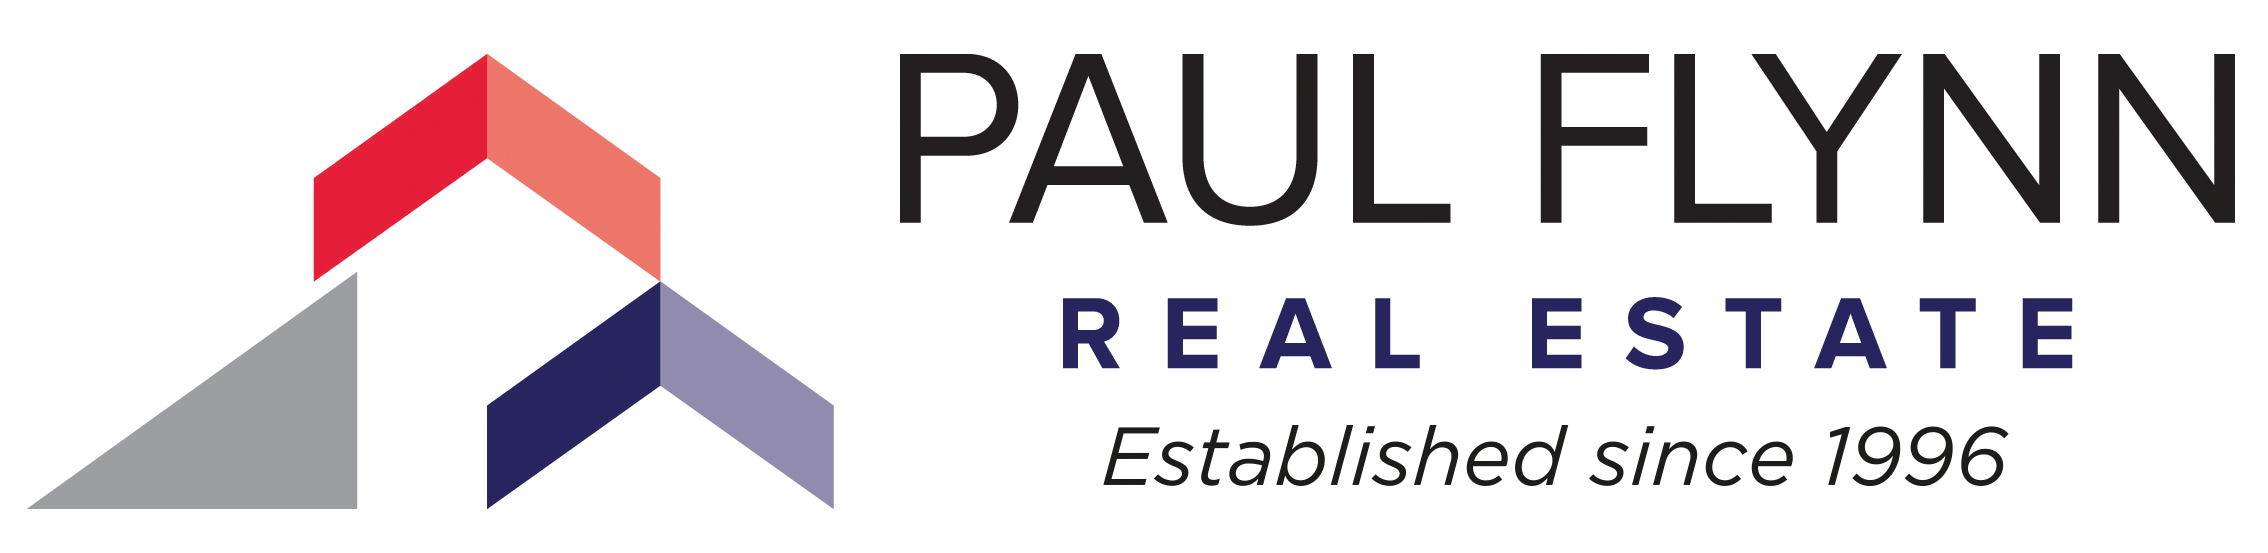 Paul Flynn Real Estate - South East Queensland - Real Estate Agency